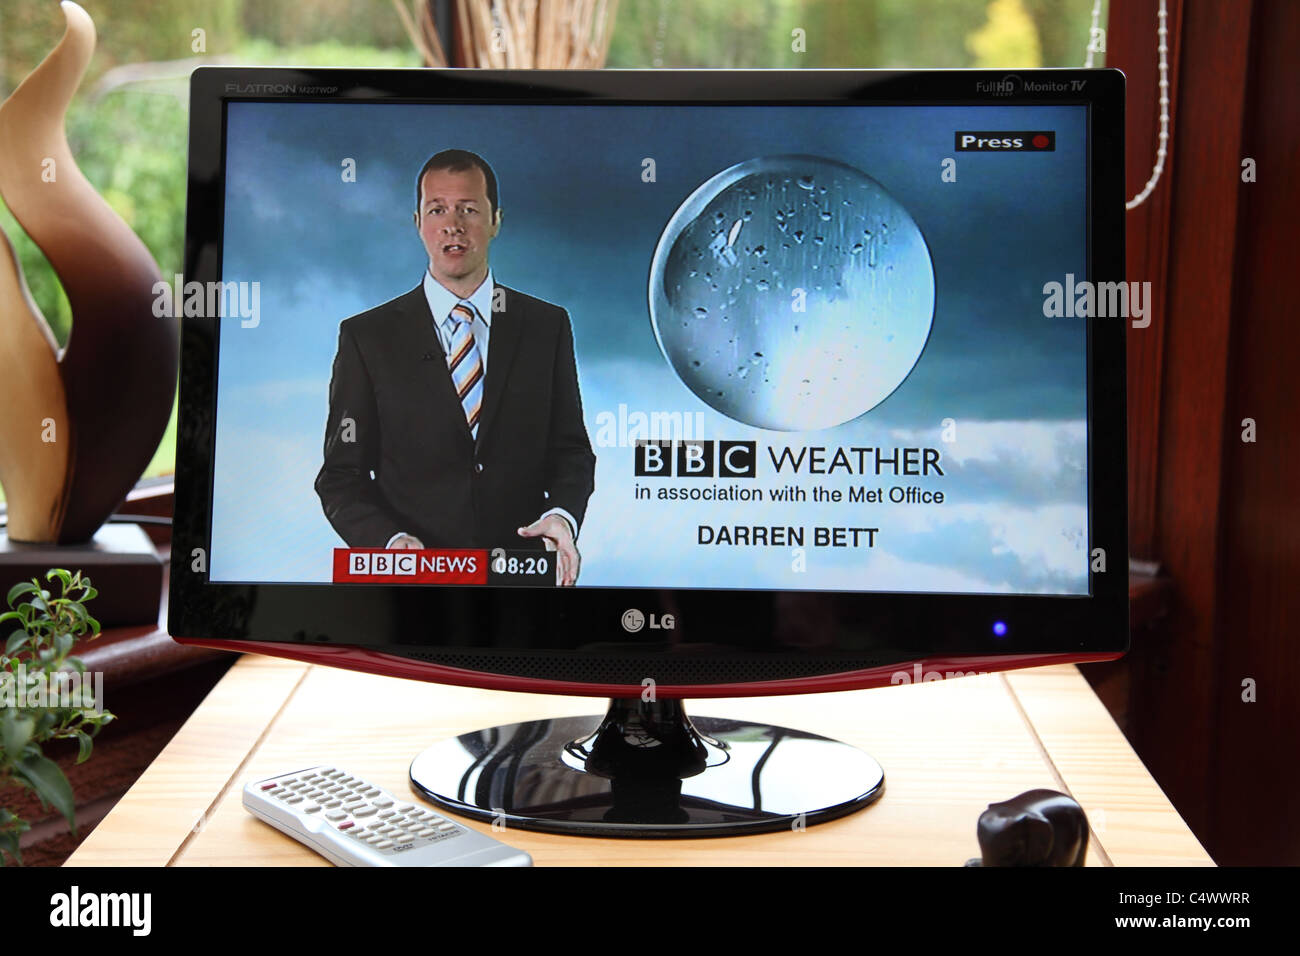 The BBC weather forecast. Stock Photo